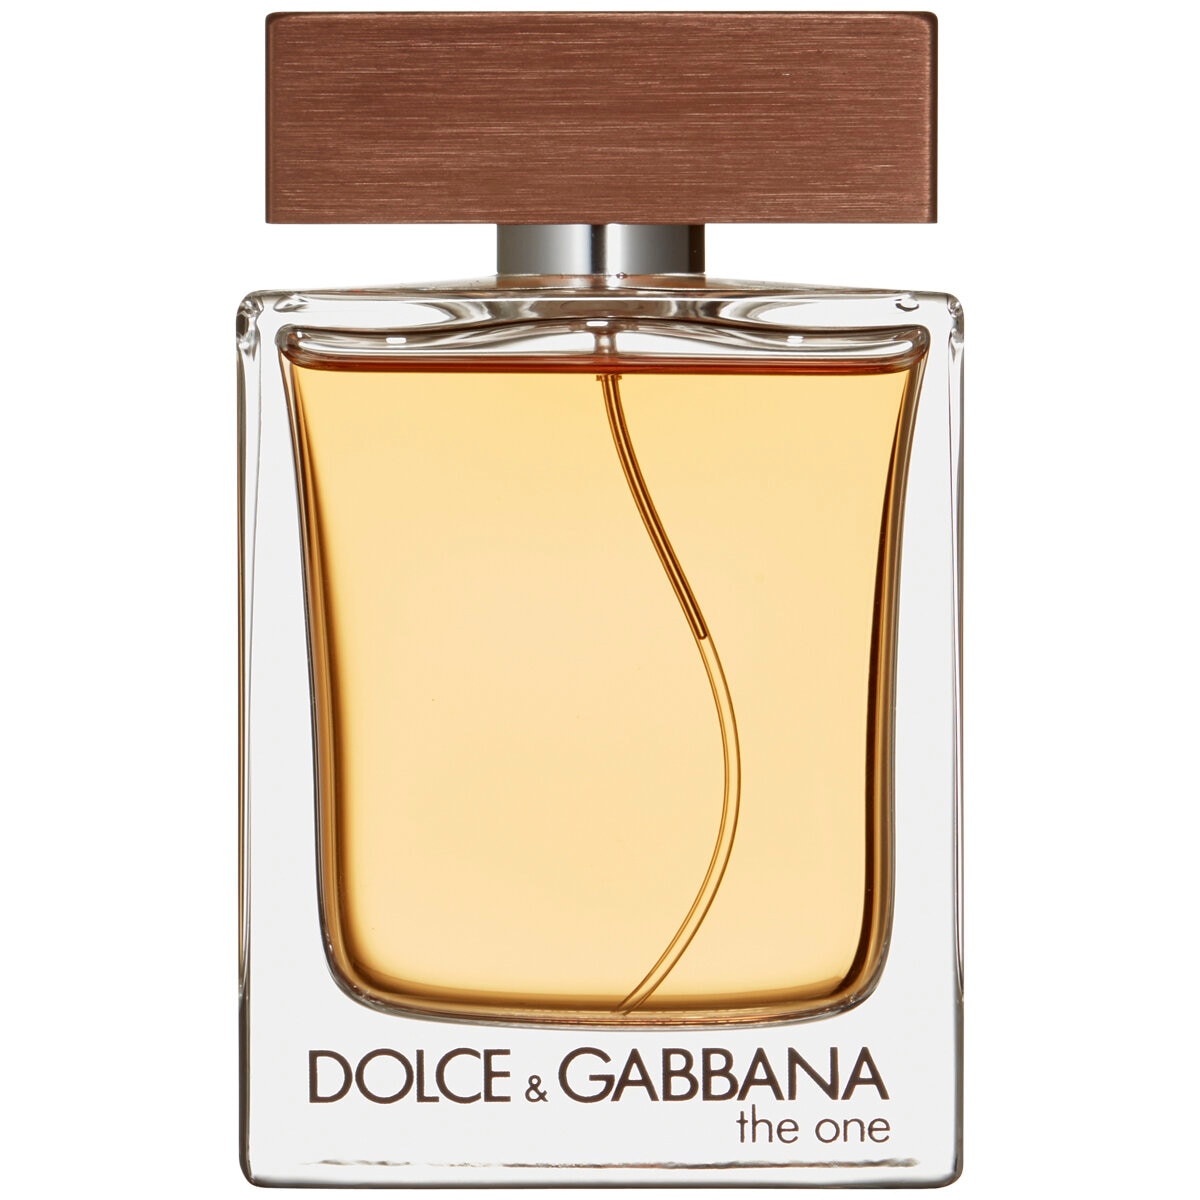 Dolce Gabbana The One Gold EDP Intense Perfumes| Online Jordan Buy ...